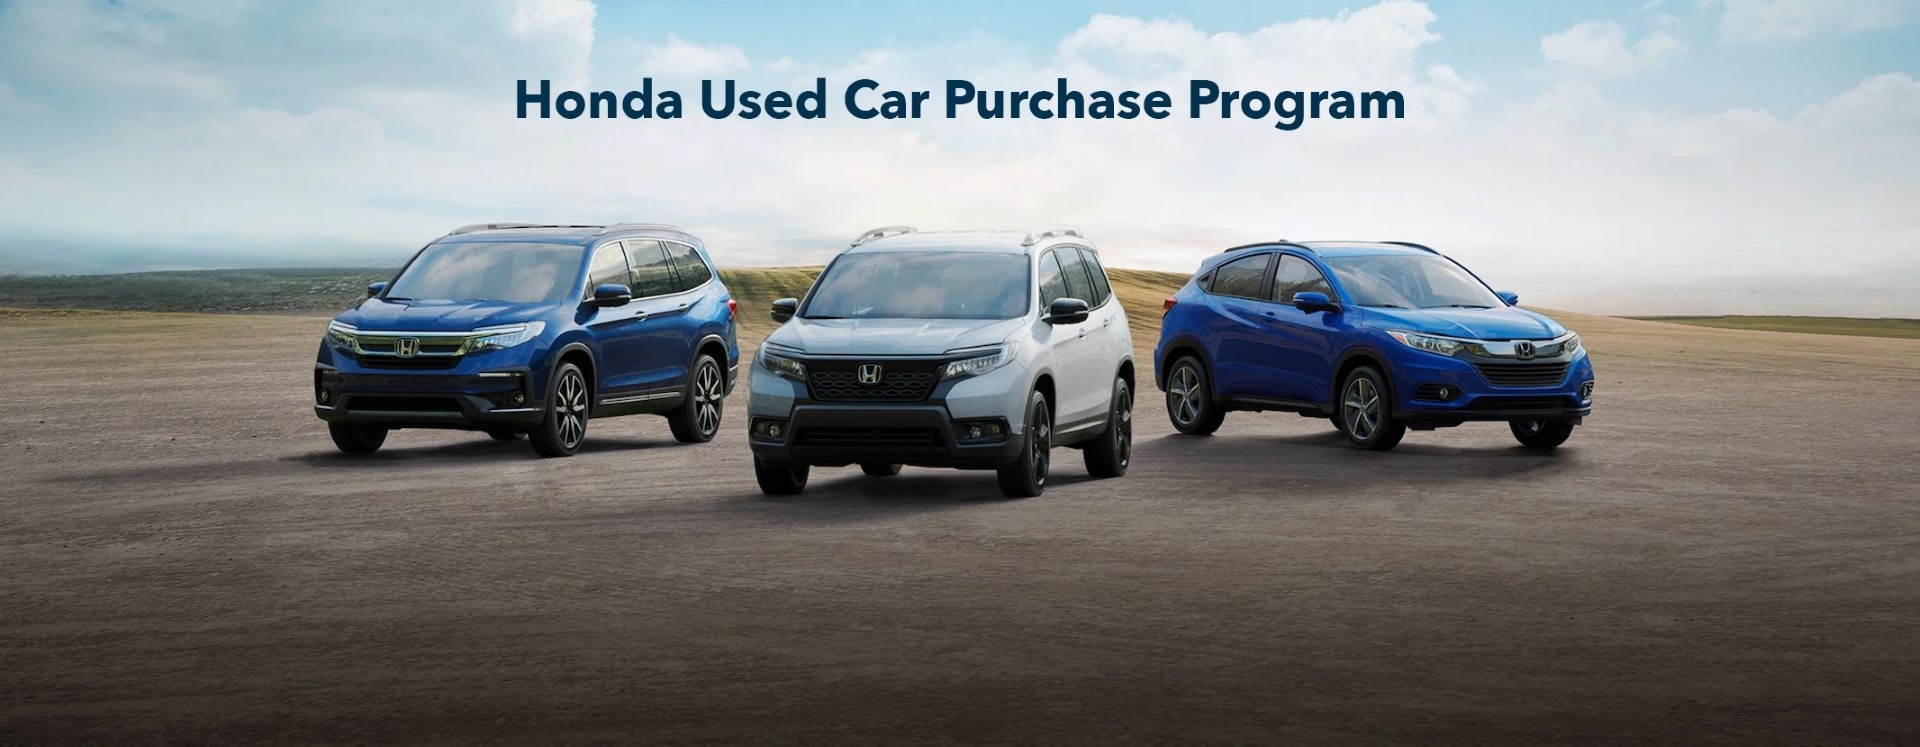 Honda Used Car Purchase Program